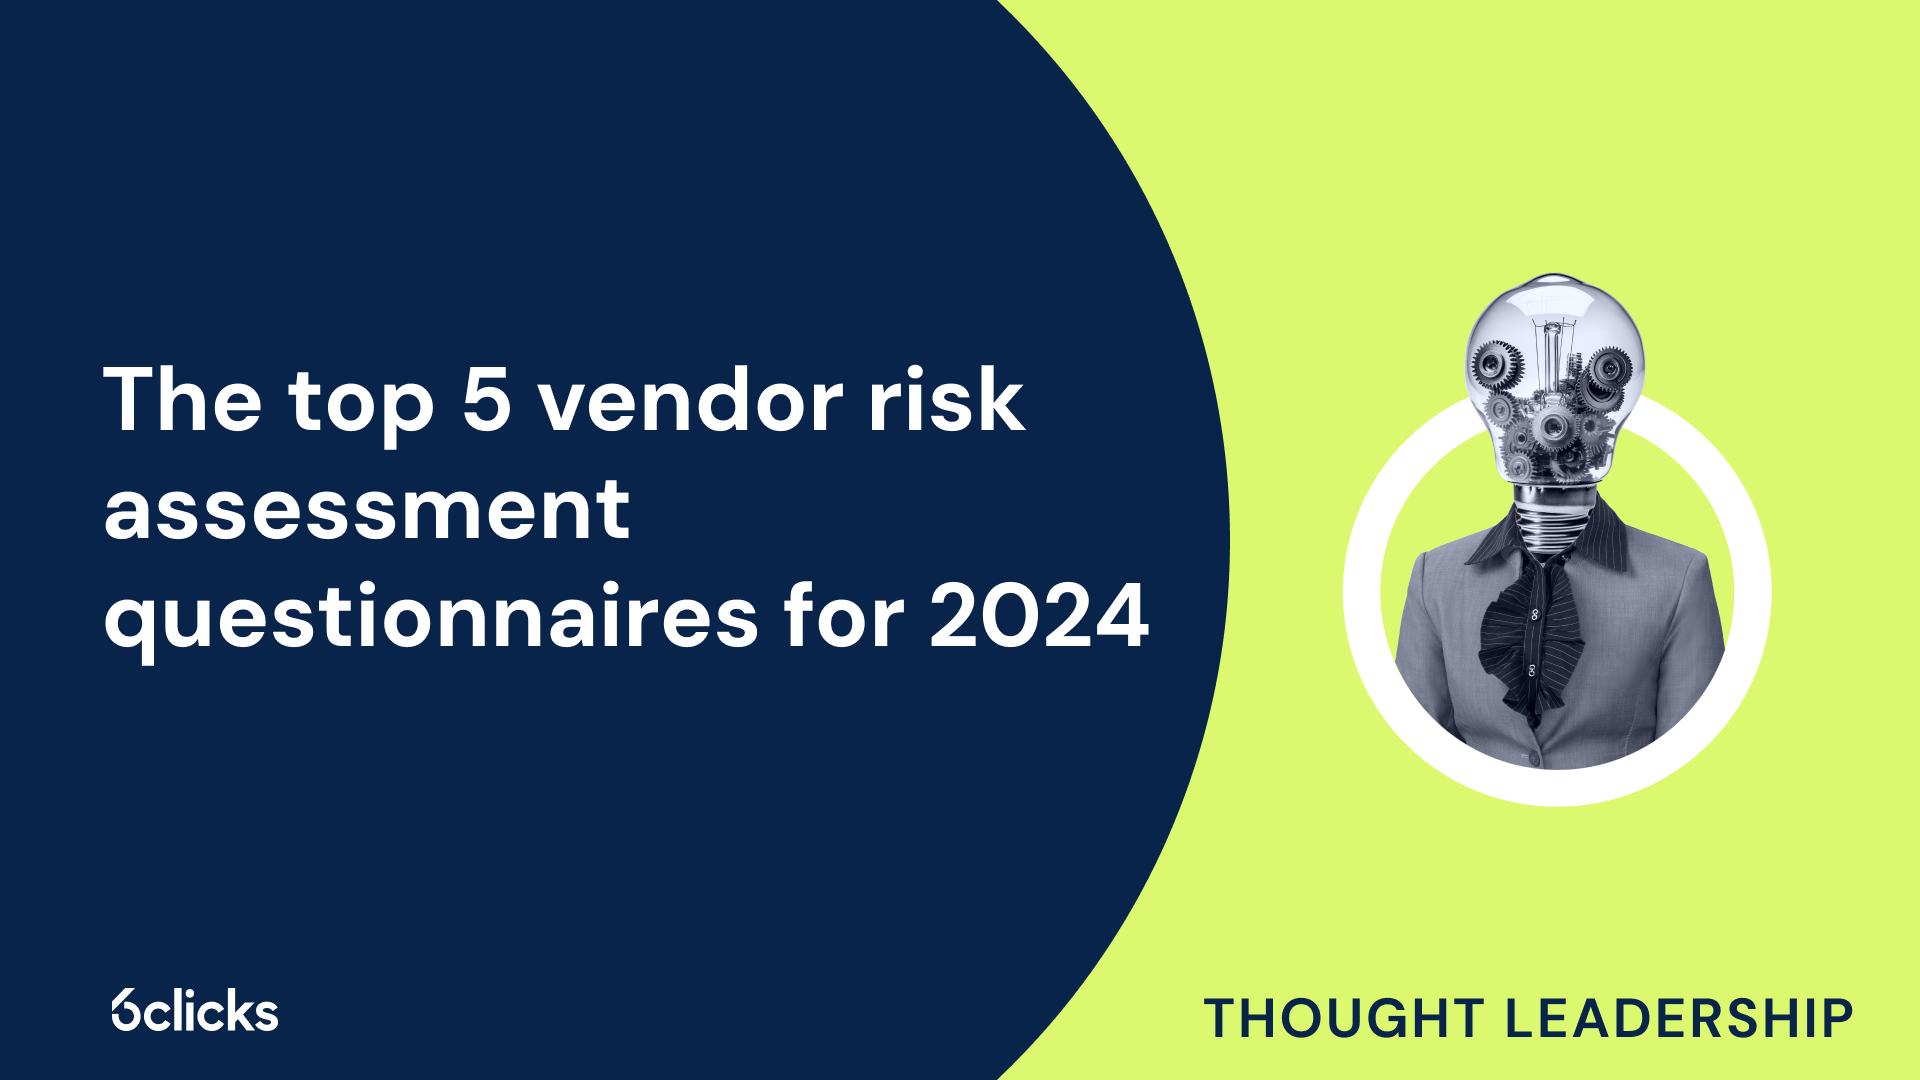 The top 5 vendor risk assessment questionnaires for 2024